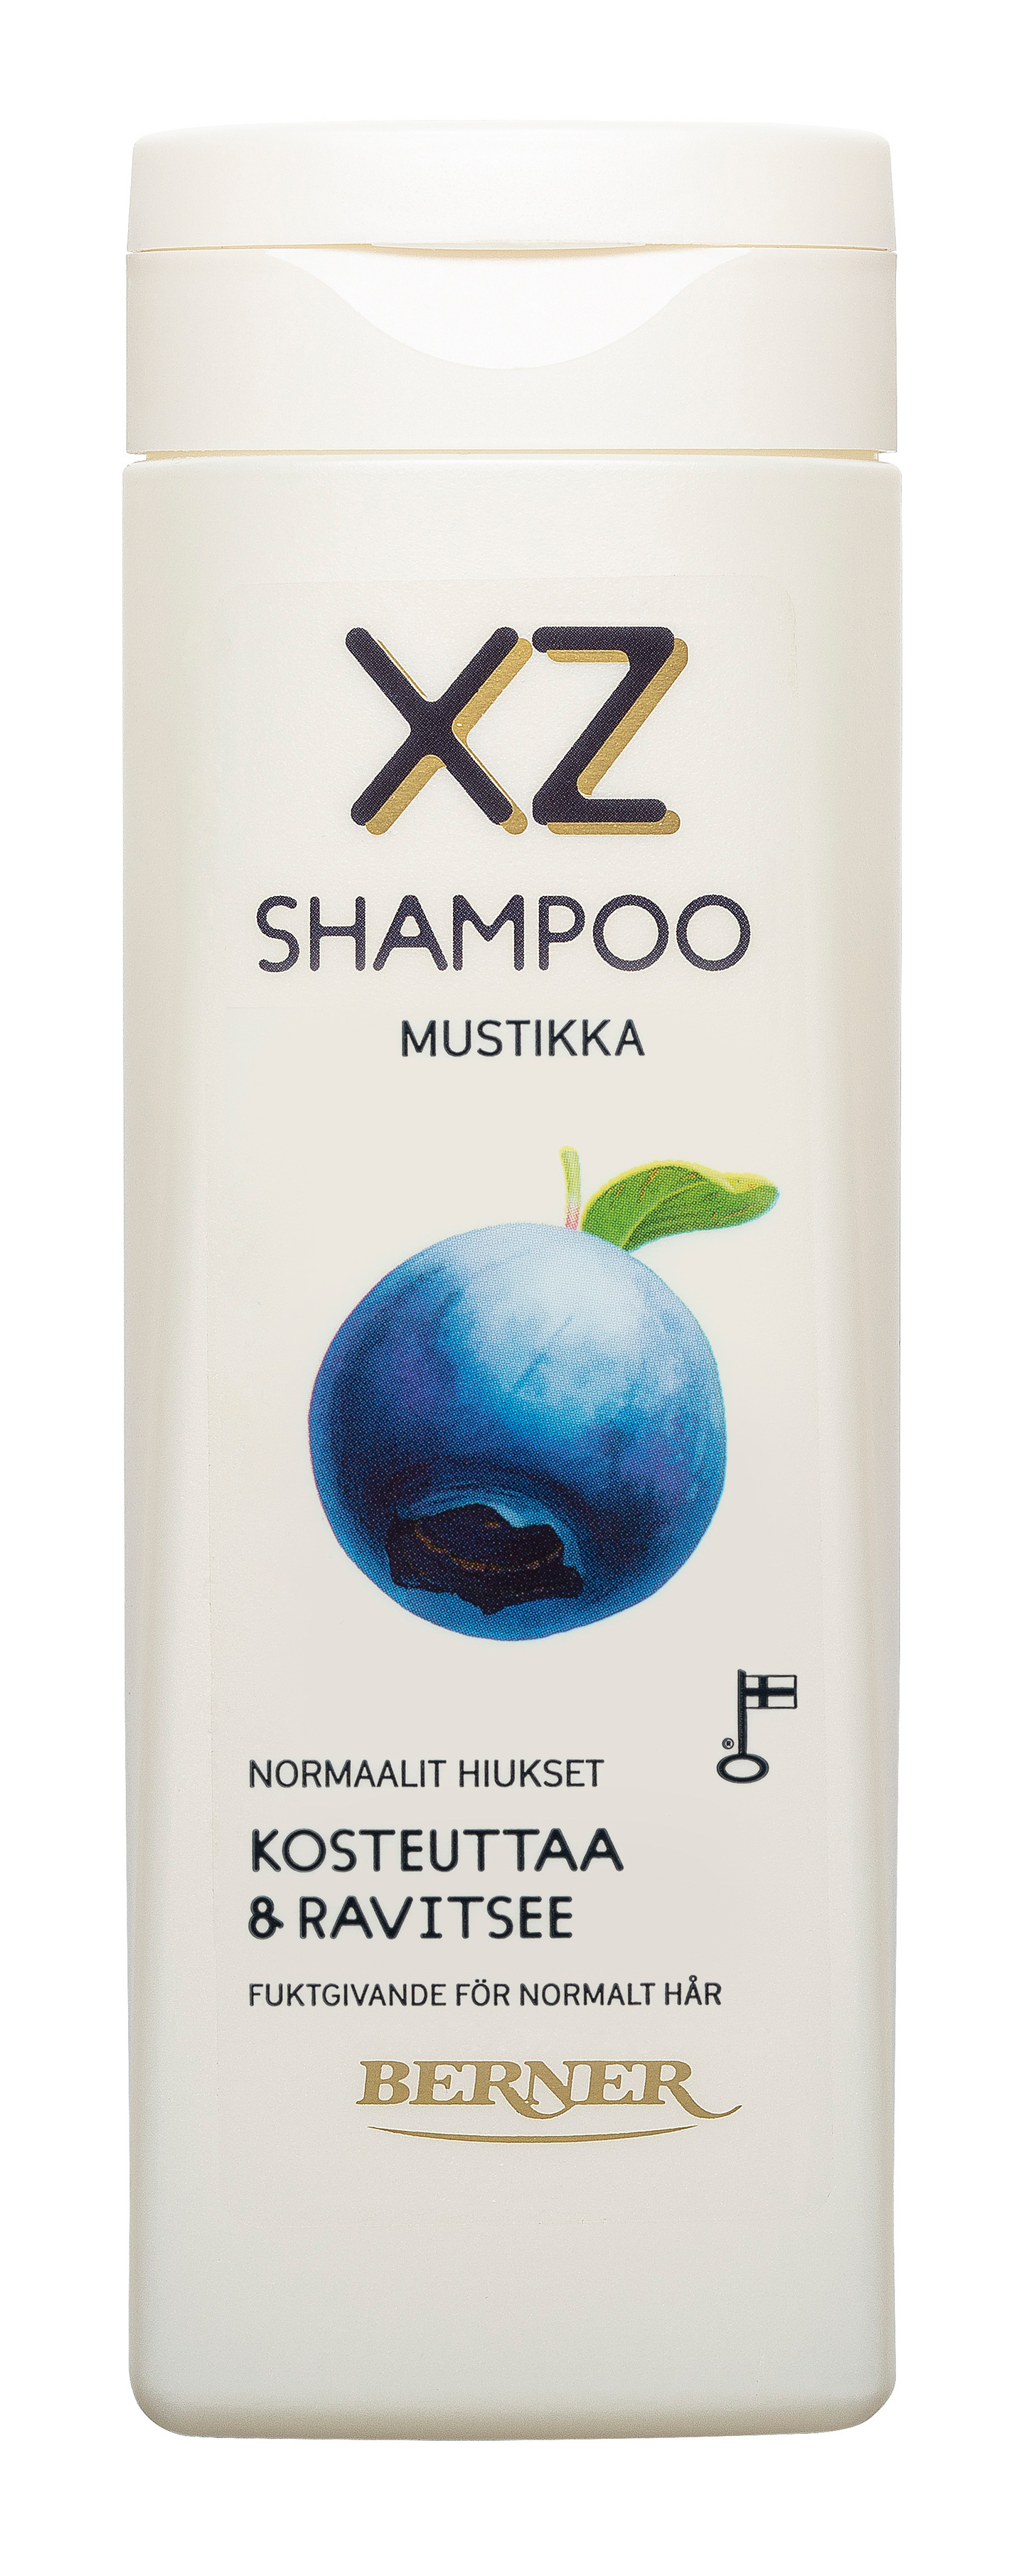 XZ shampoo 250ml mustikka